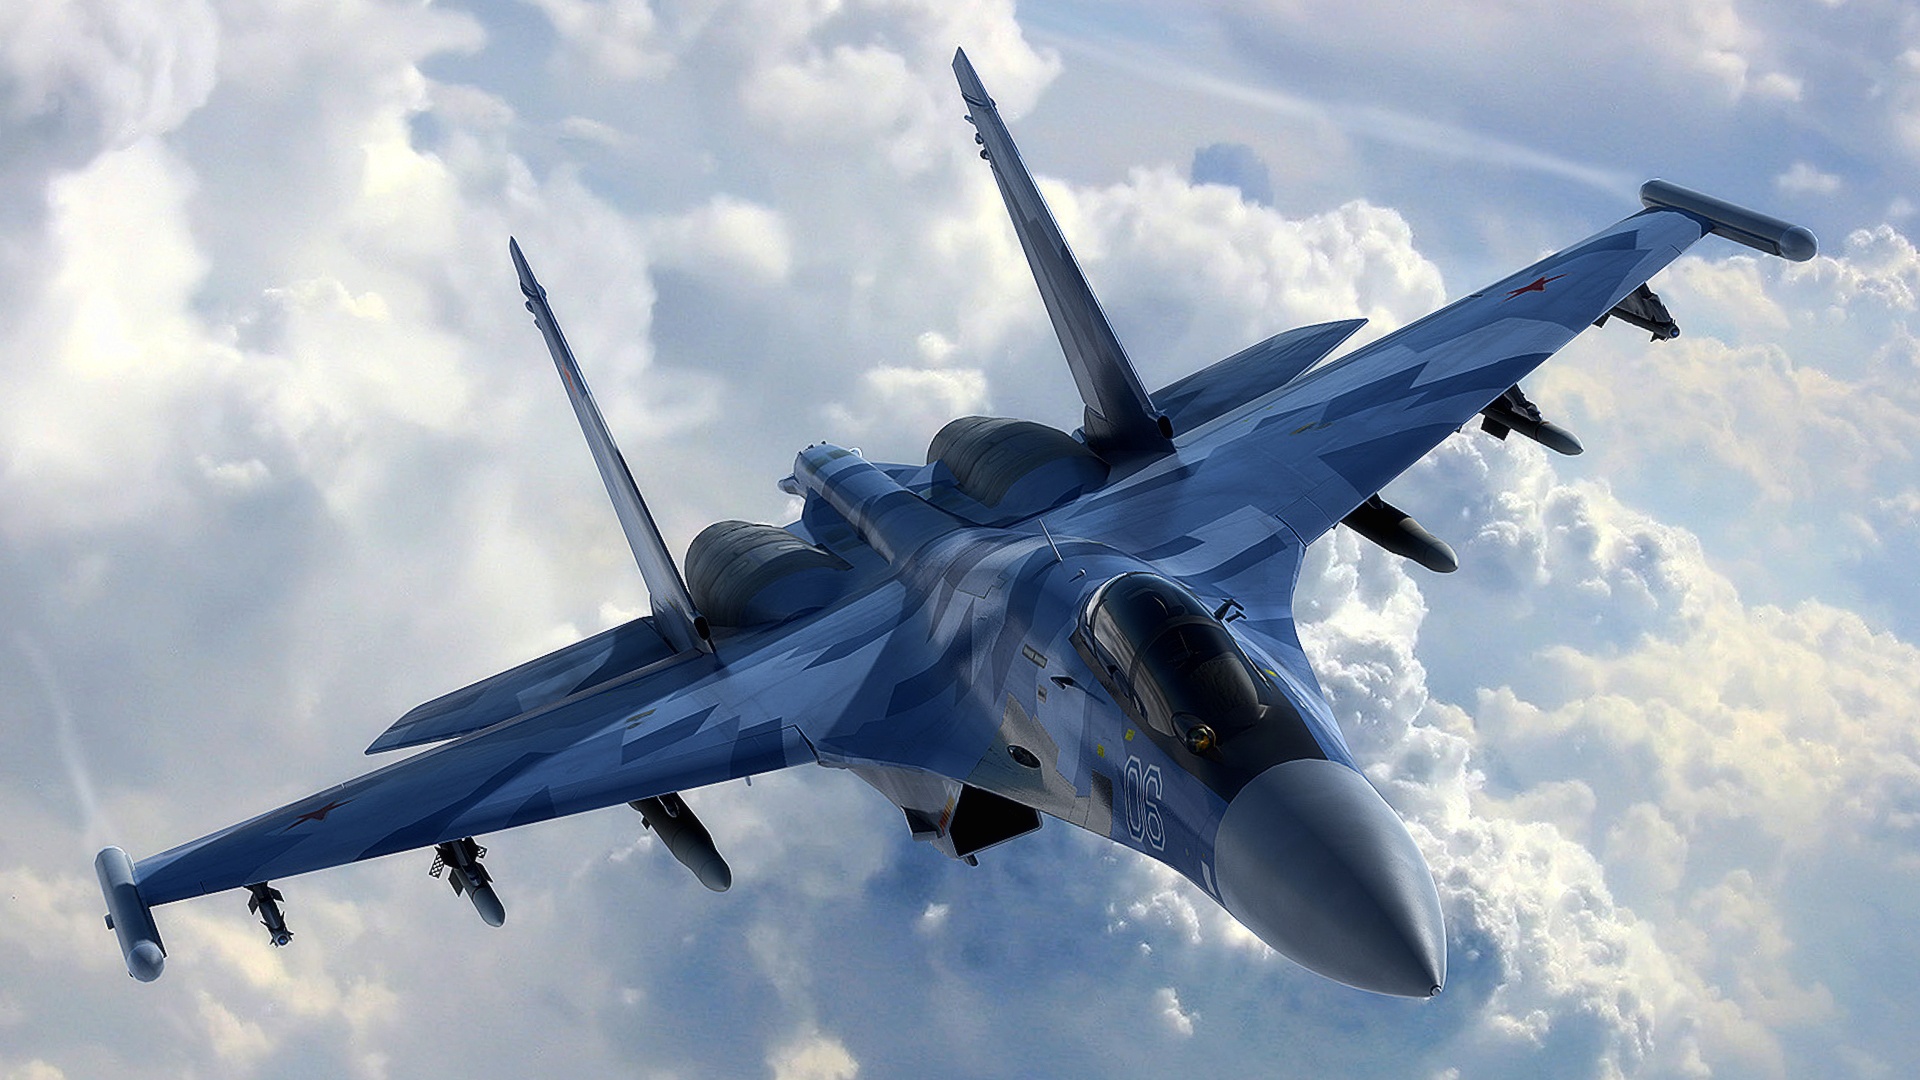 jet fighter cool background images